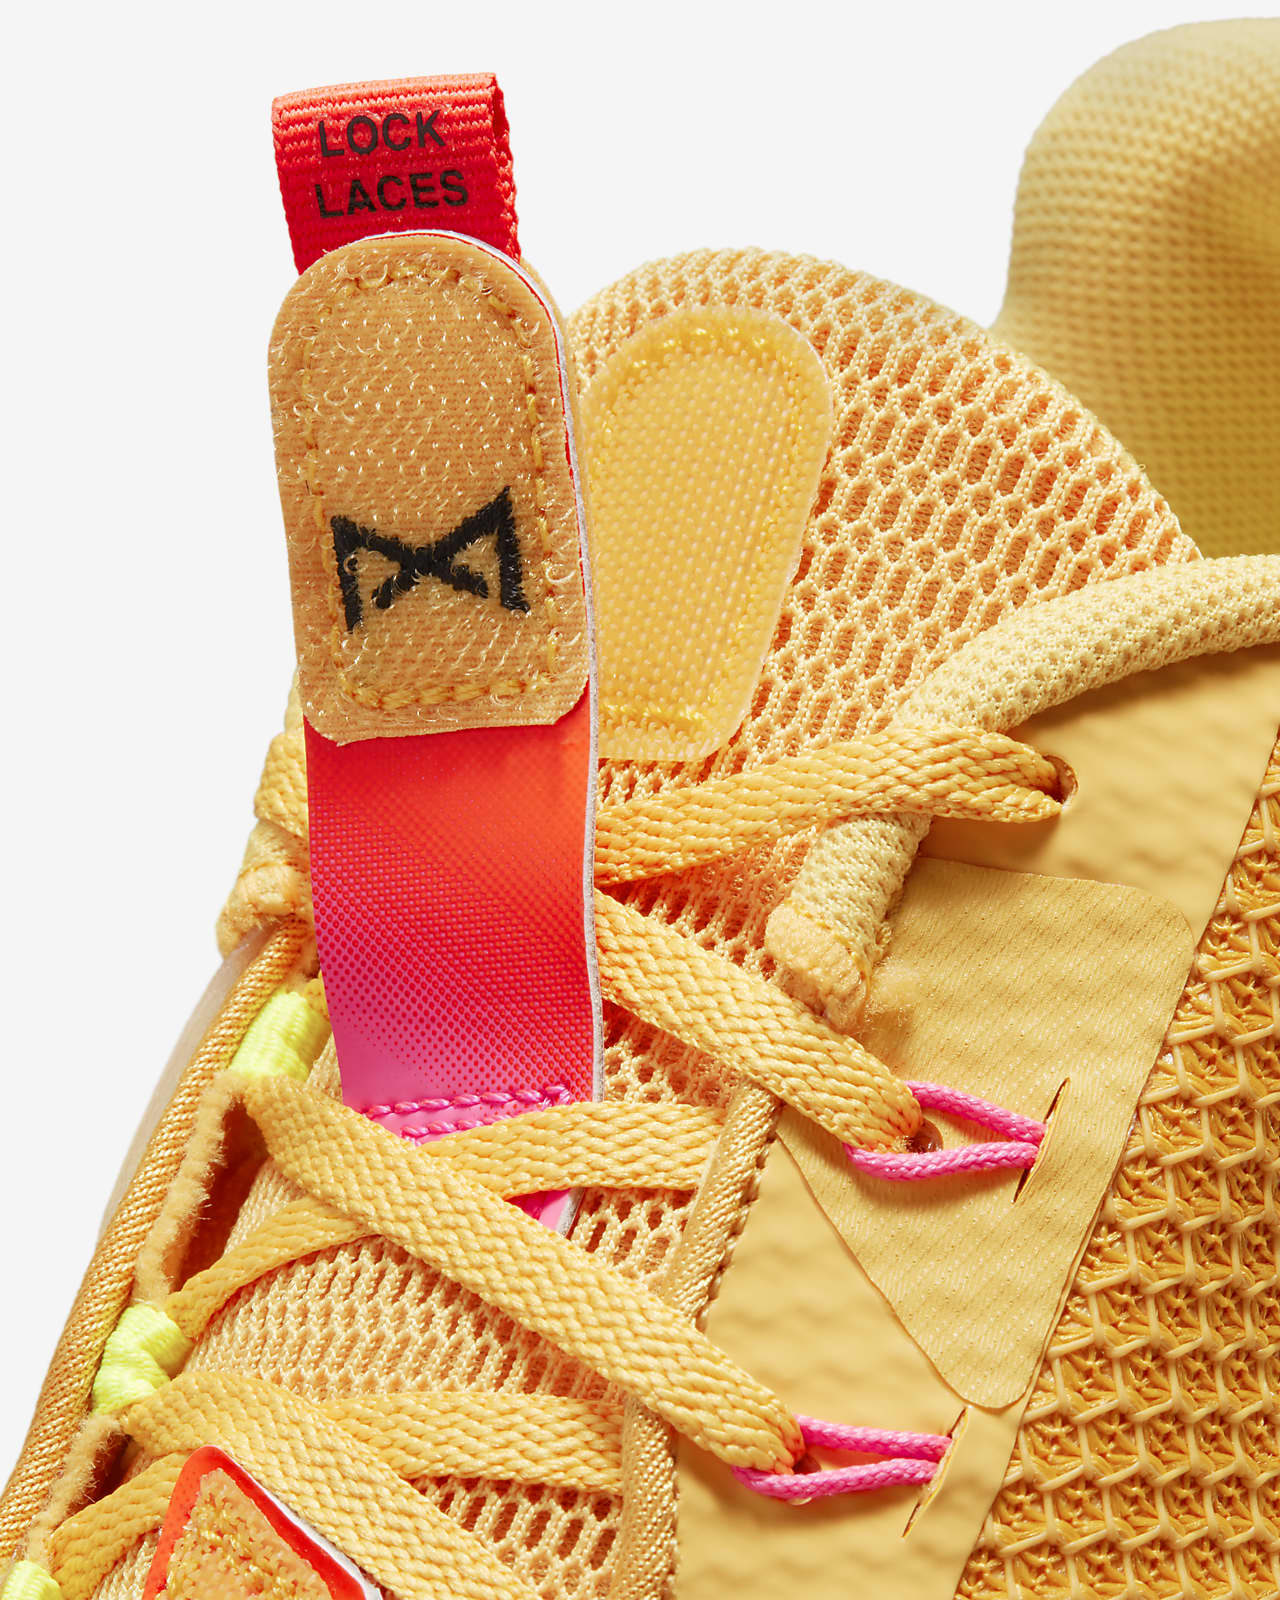 Nike Metcon 7 X Training Shoe